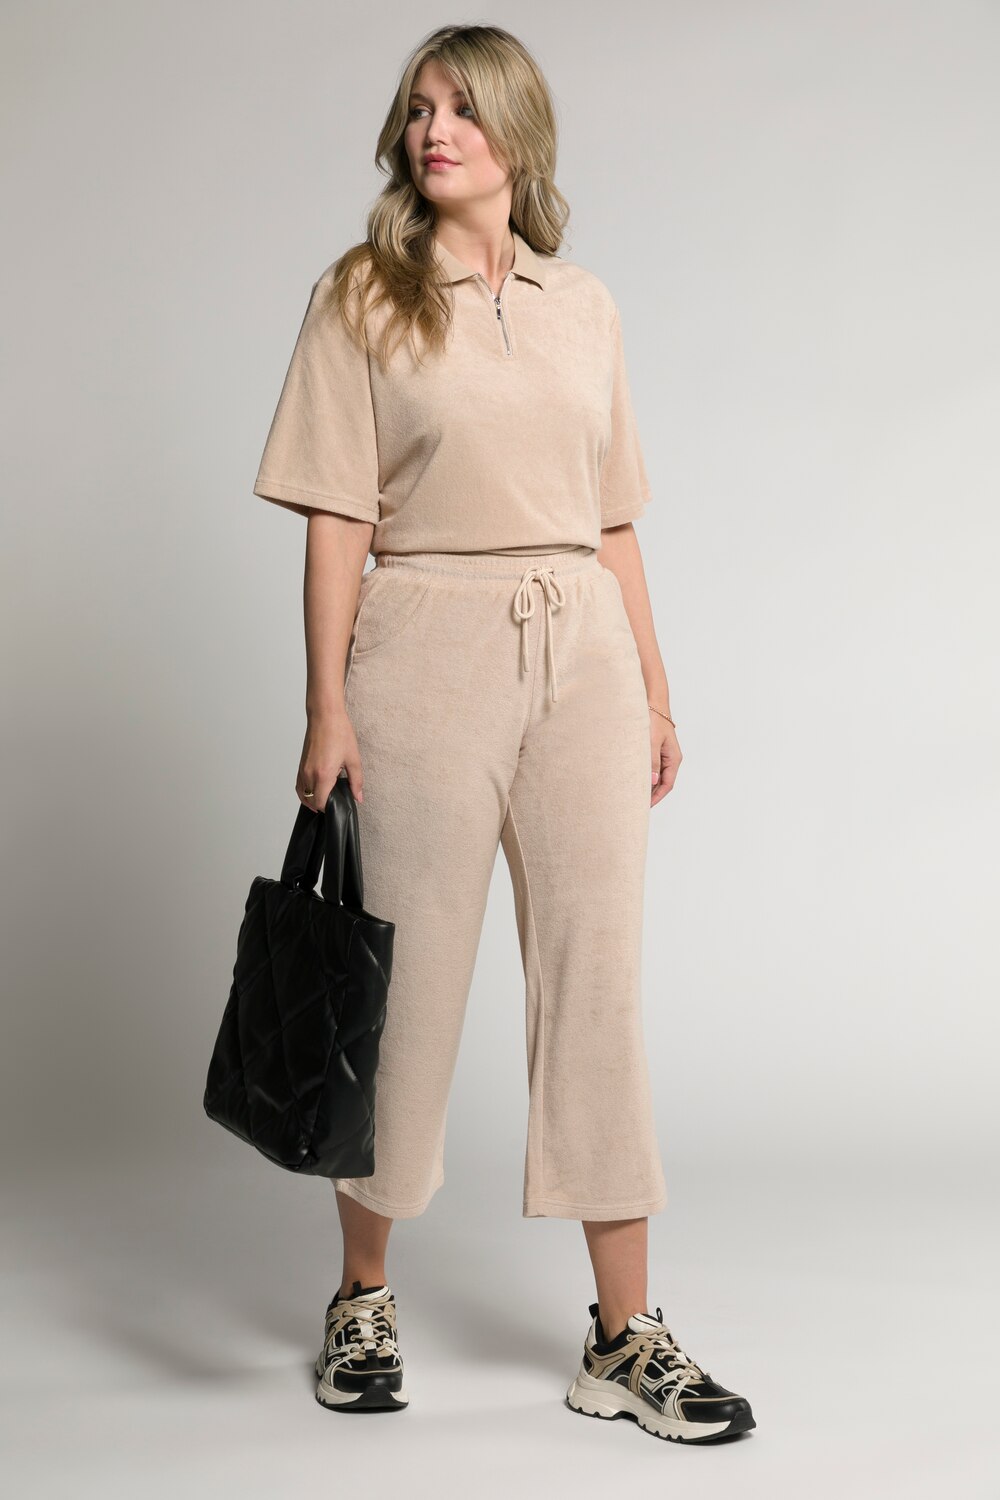 Plus Size Terry Elastic Waist Wide Leg Cotton Knit Crop Pants, Woman, beige, size: 16/18, cotton, Ulla Popken